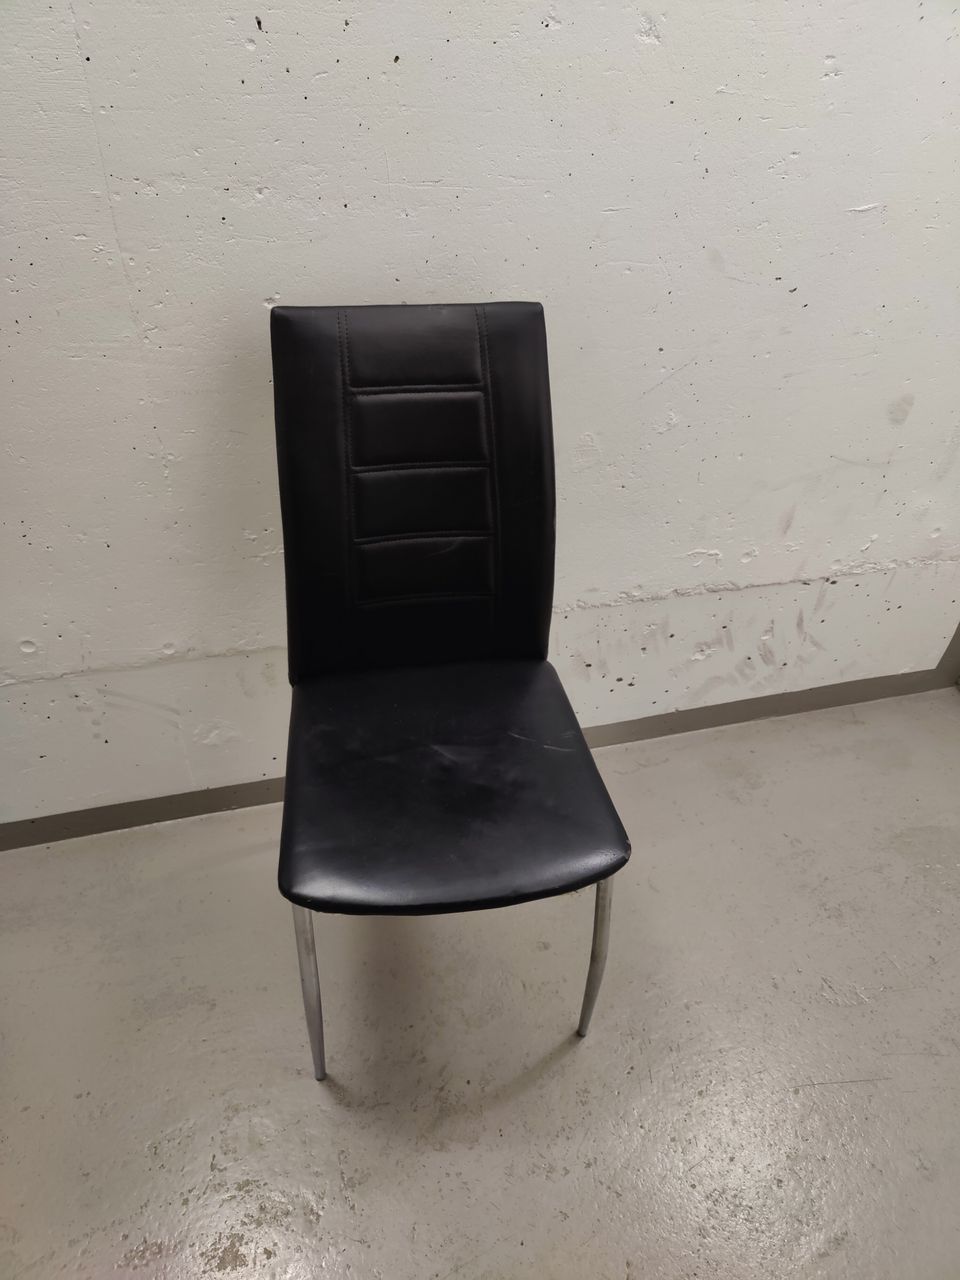 musta tuoli